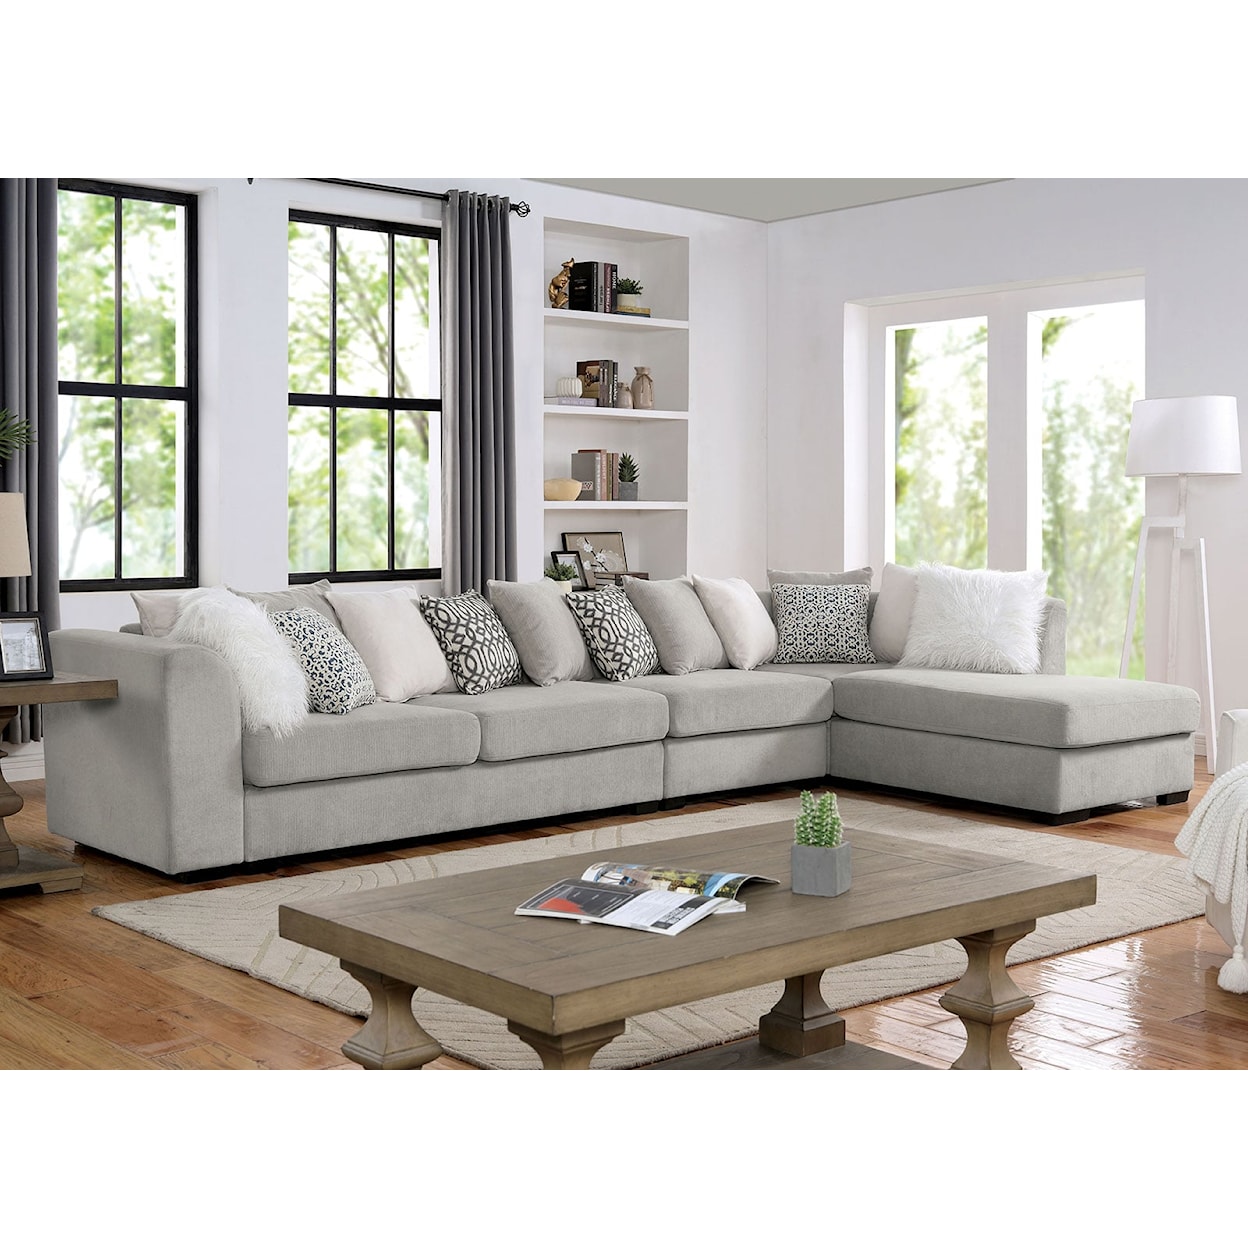 Furniture of America Leandra 4-Piece Sectional Sofa